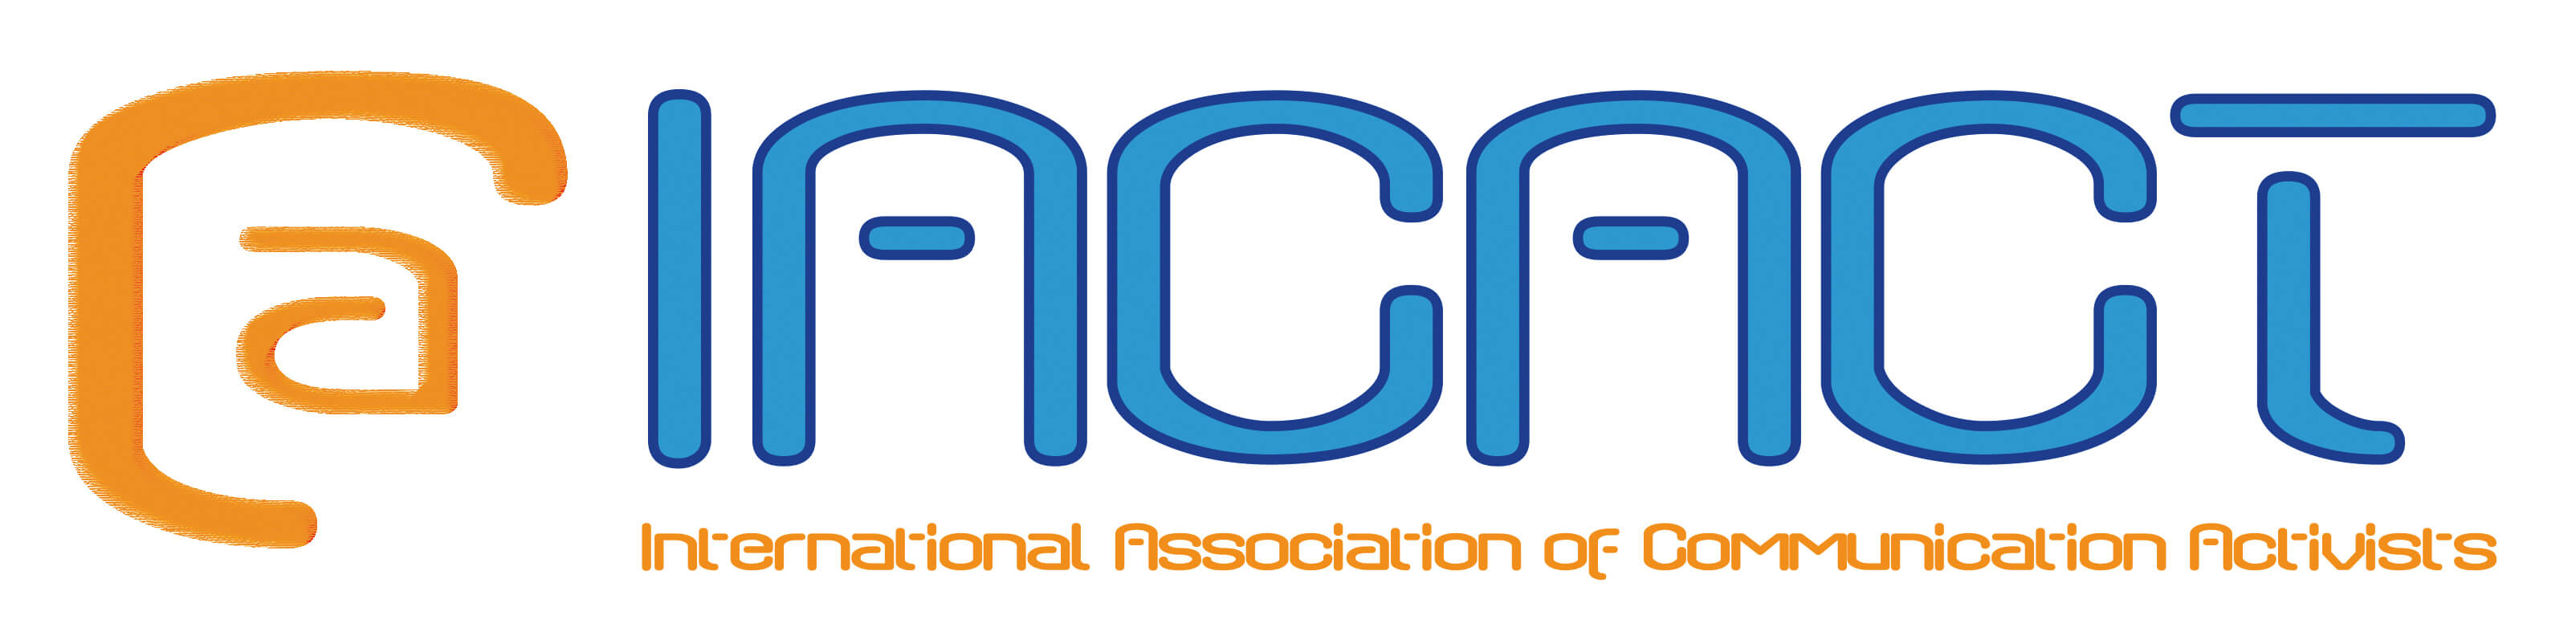 IACACT logo